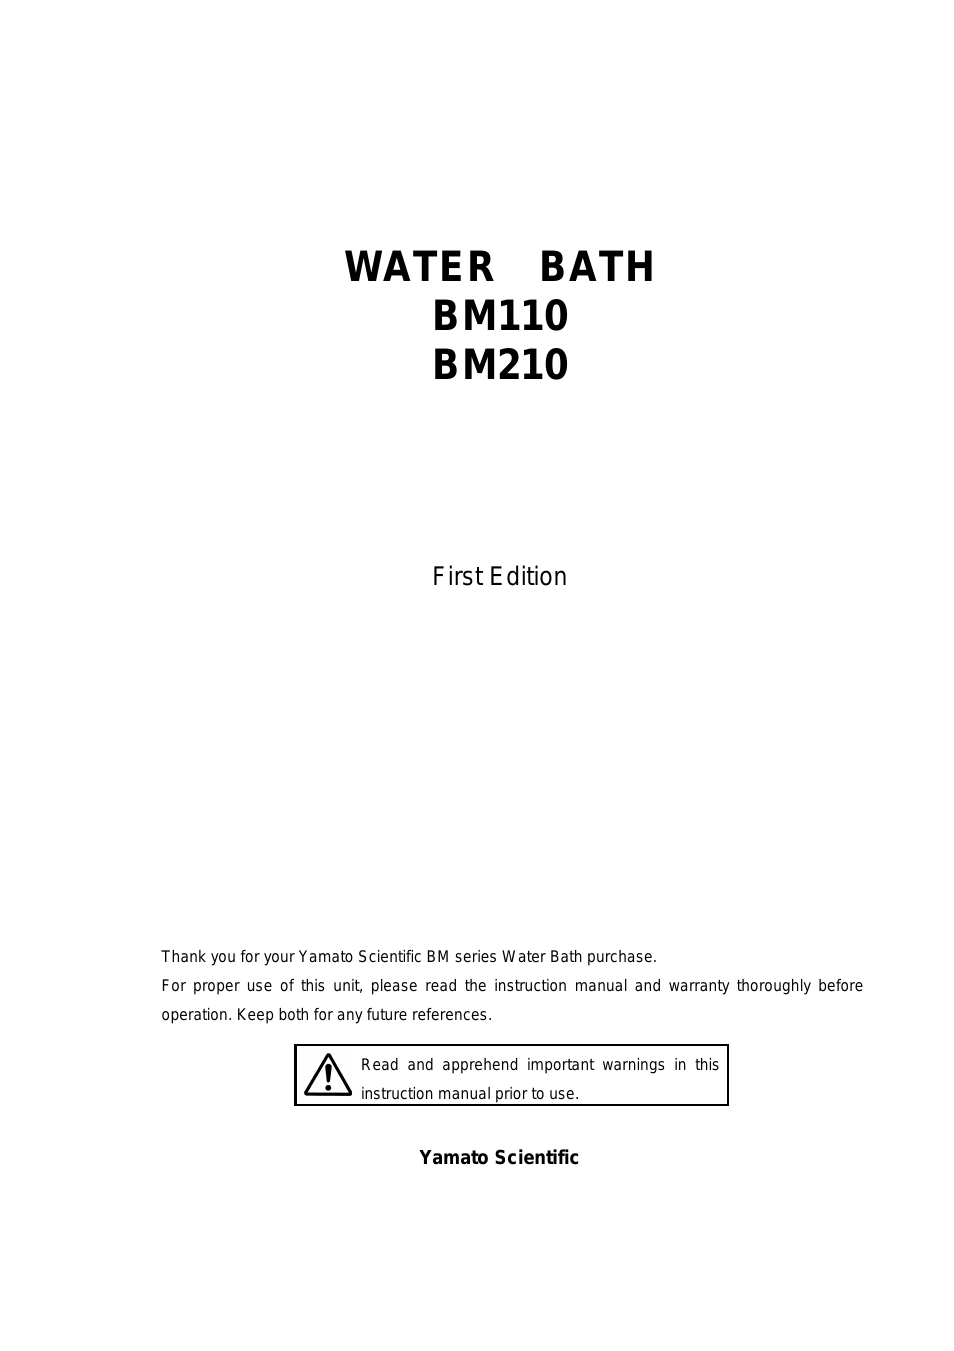 BM210 Water Baths